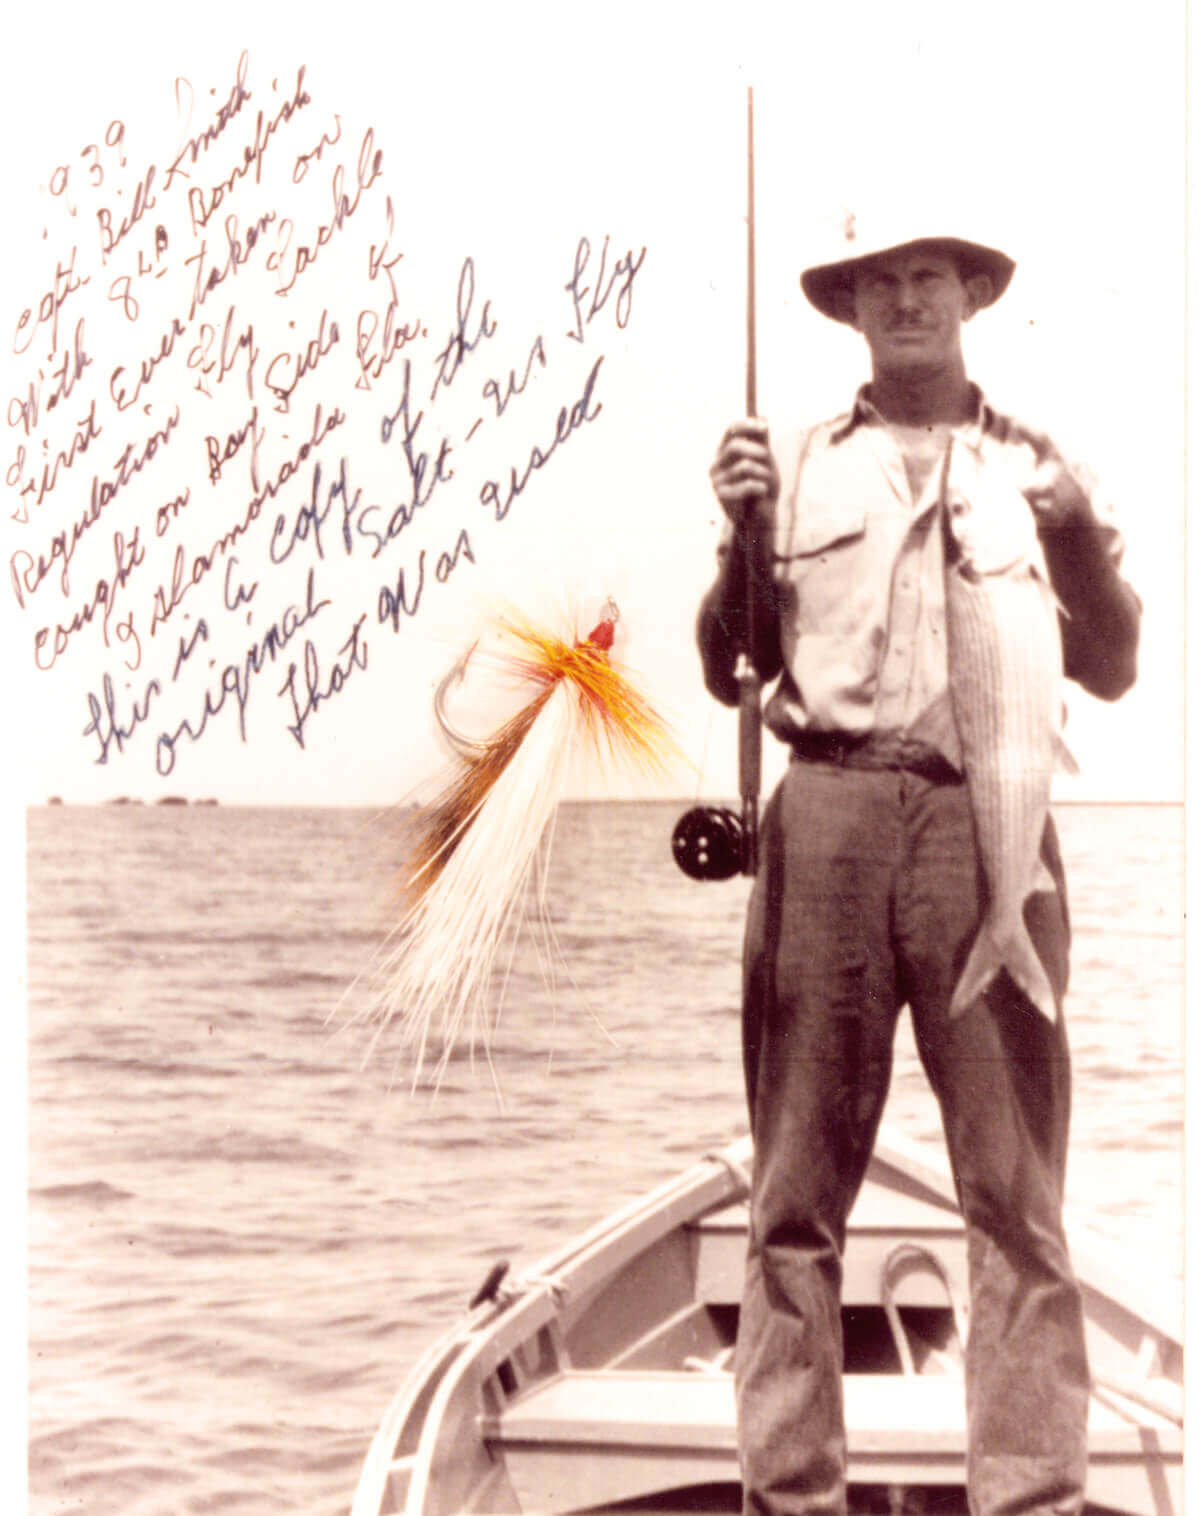 first bonefish on the fly - tail fly fishing magazine - IGFA record